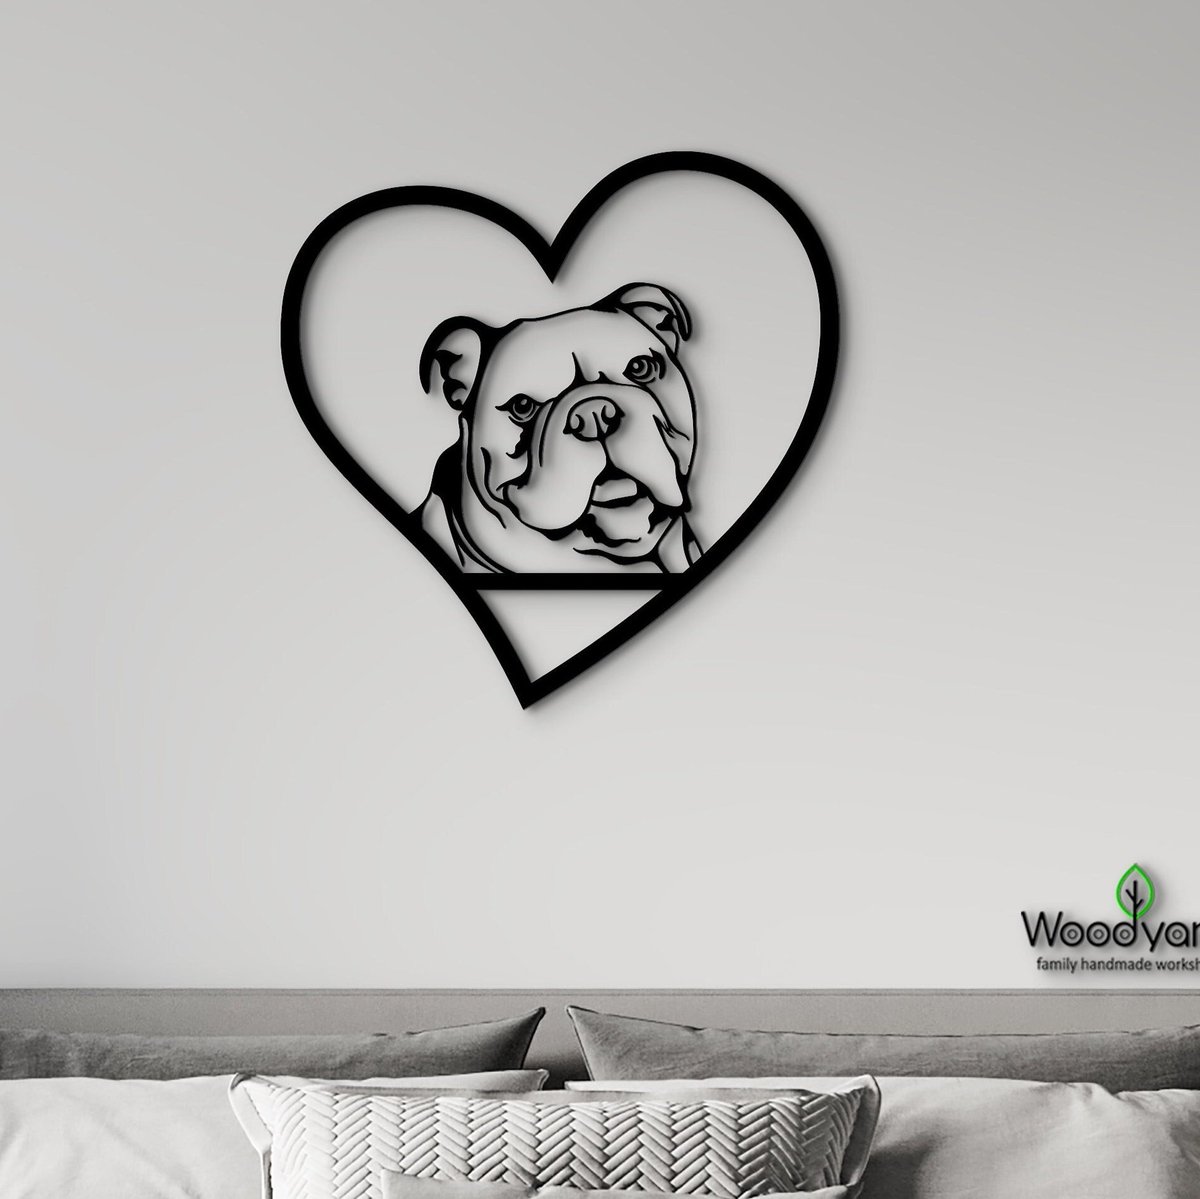 English Bulldog Wooden Wall Sign with Heart-Shaped Design
etsy.me/3NxdYZO
 #dogdecorforhome #dogmemorial #englishbulldogsign #englishbulldogart #englishbulldogdog #englishbulldoglove 
#Bulldogs #Bulldog #Bulldoglovers #bulldogsofinstagram #bulldogpuppies #Dogsarefamily